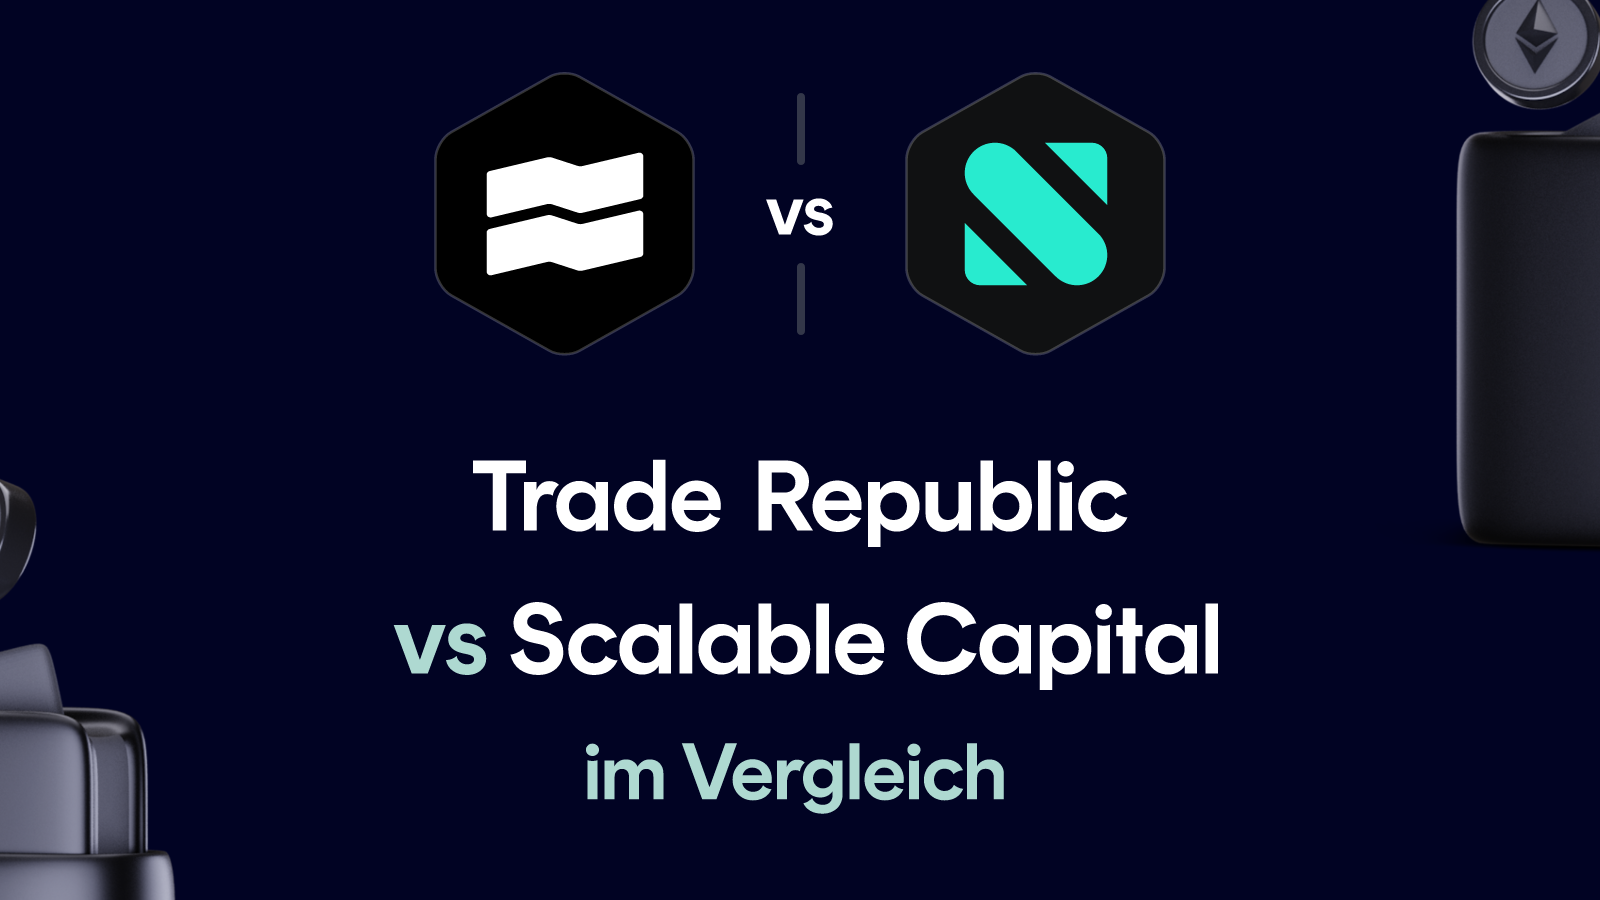 Trade-republic vs Scalable-capital